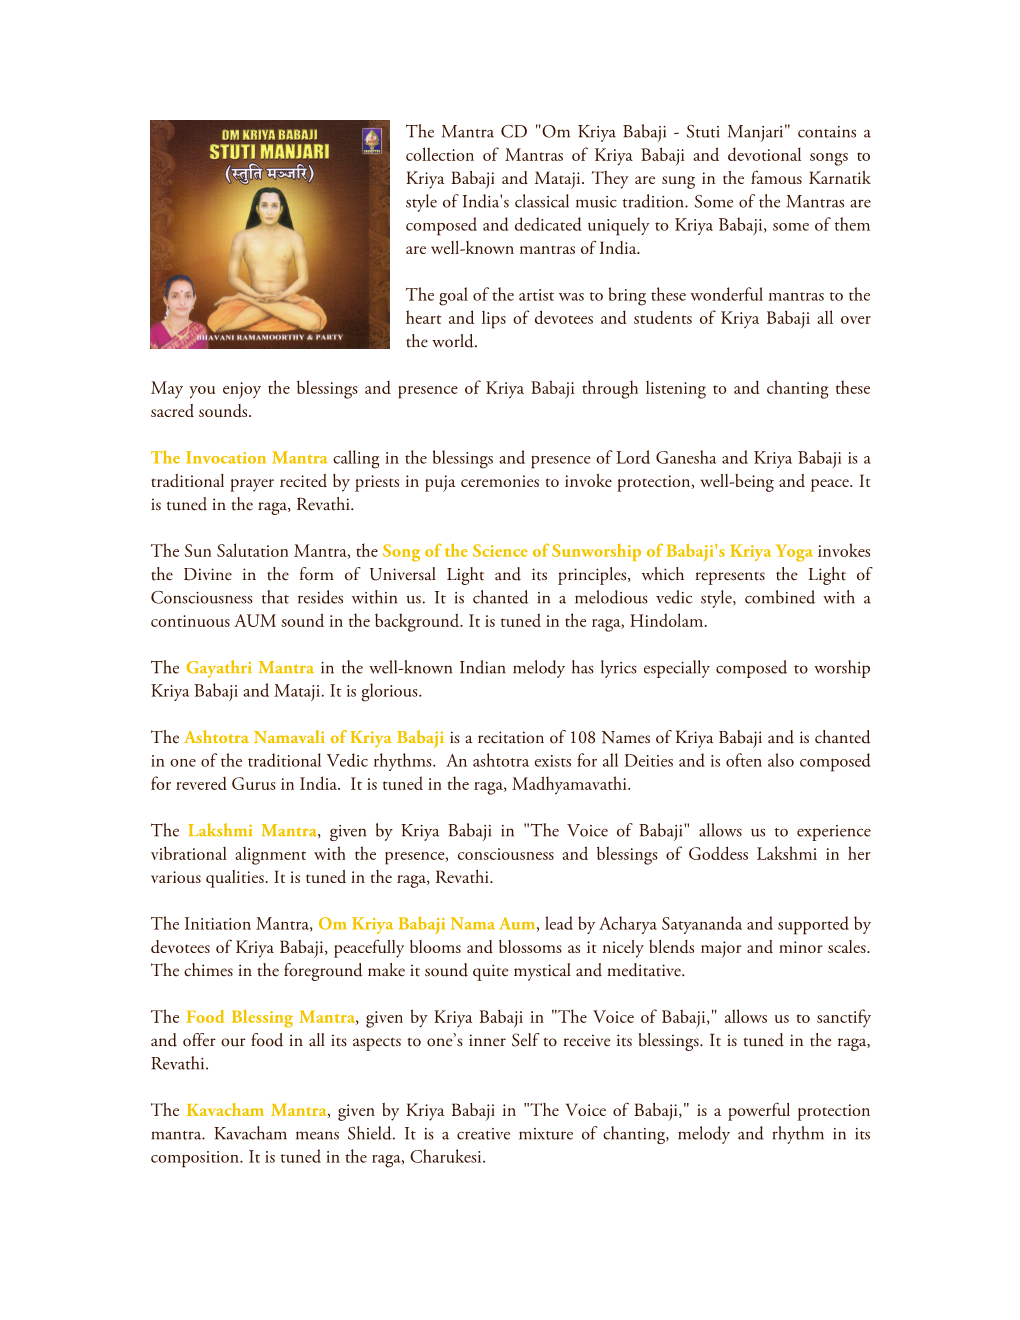 The Mantra CD "Om Kriya Babaji - Stuti Manjari" Contains a Collection of Mantras of Kriya Babaji and Devotional Songs to Kriya Babaji and Mataji